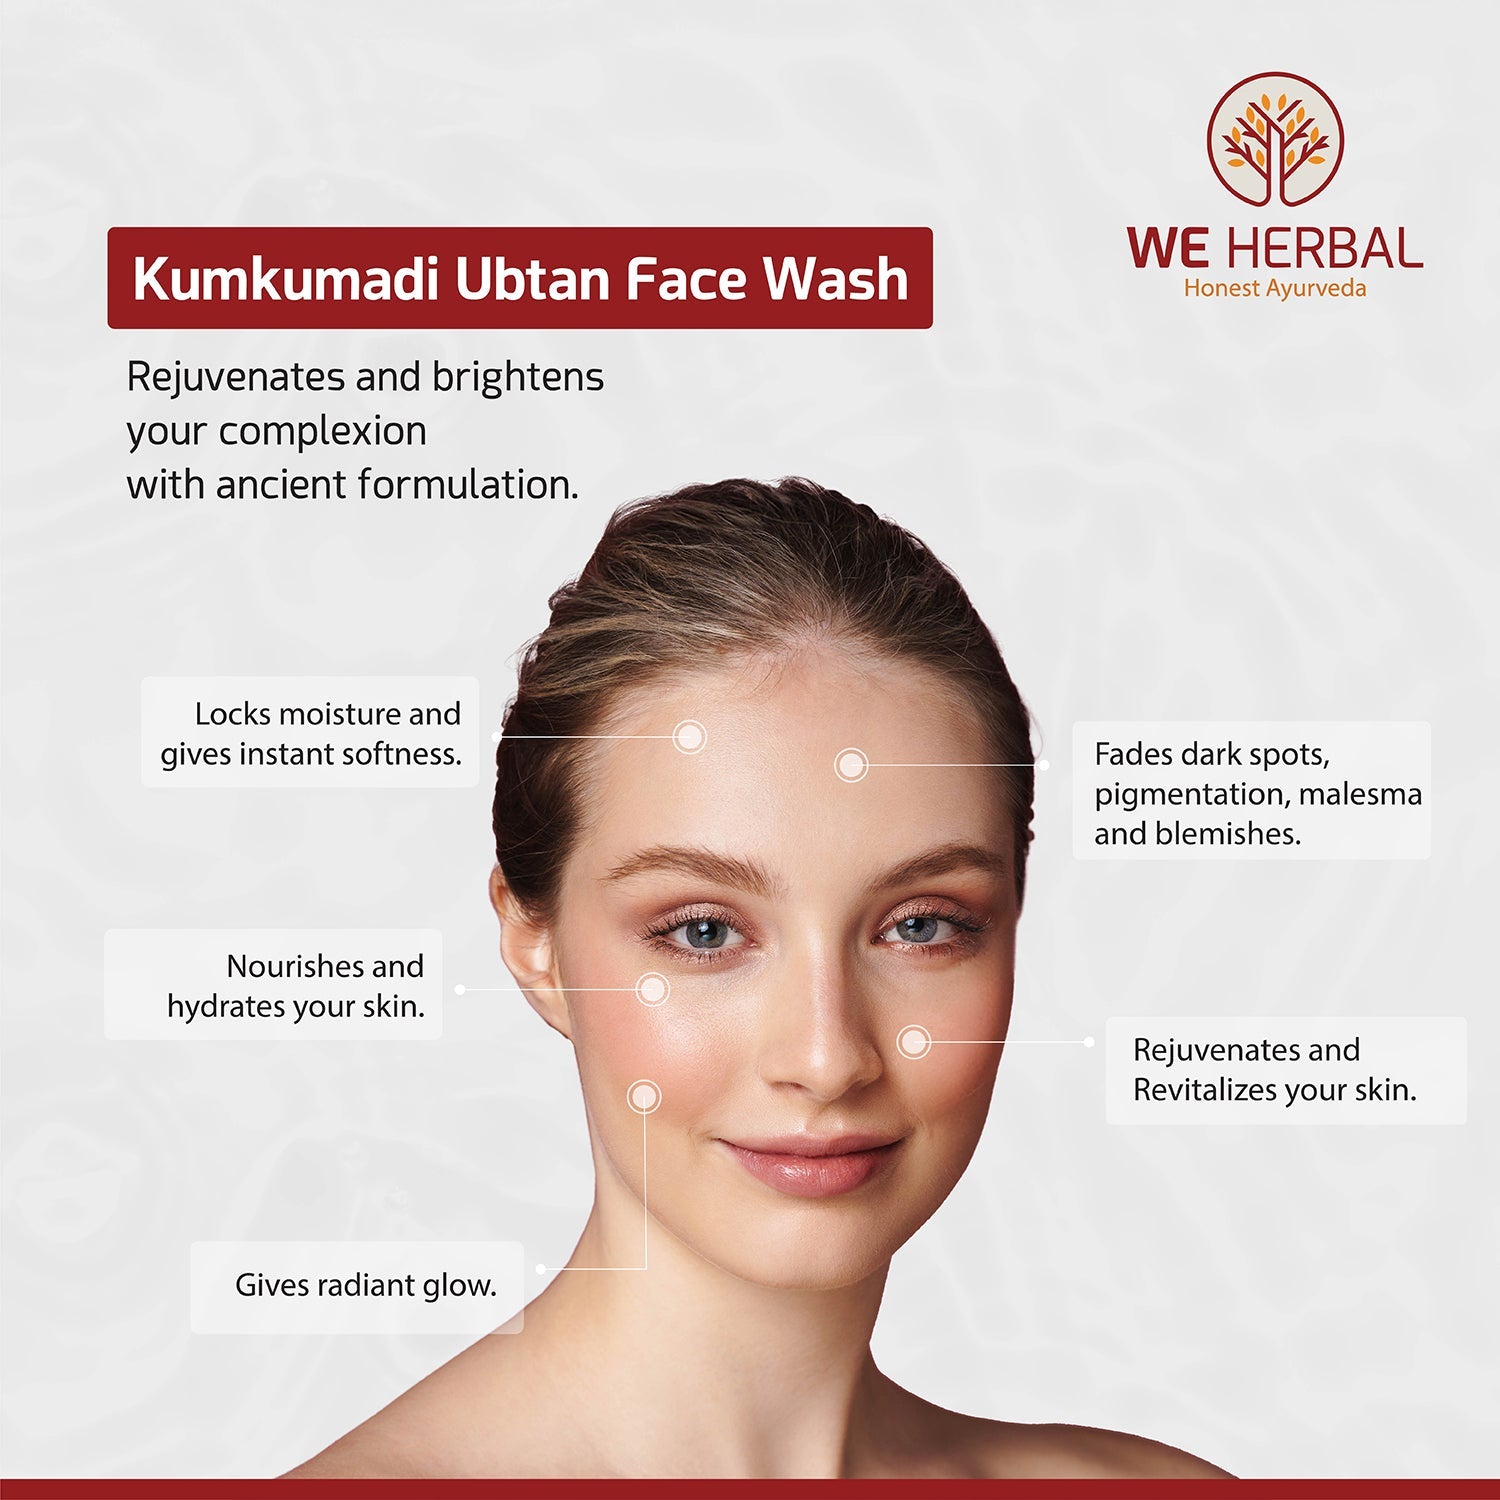 Kumkumadi Ubtan Face Wash & Natural Rose Water Combo We Herbal | Back to the Nature